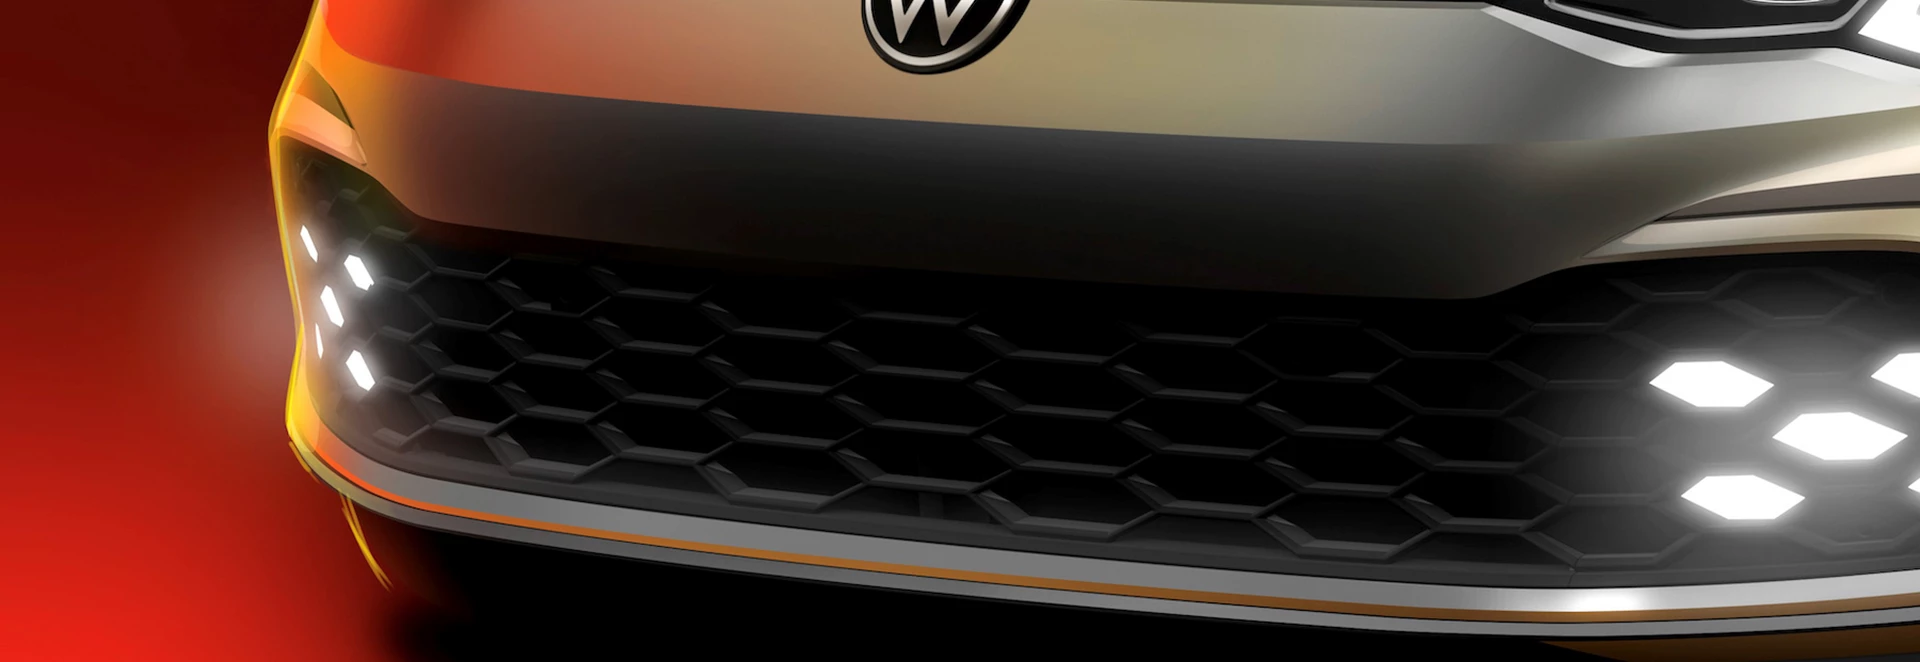 New Volkswagen Golf GTD teased ahead of Geneva Motor Show reveal